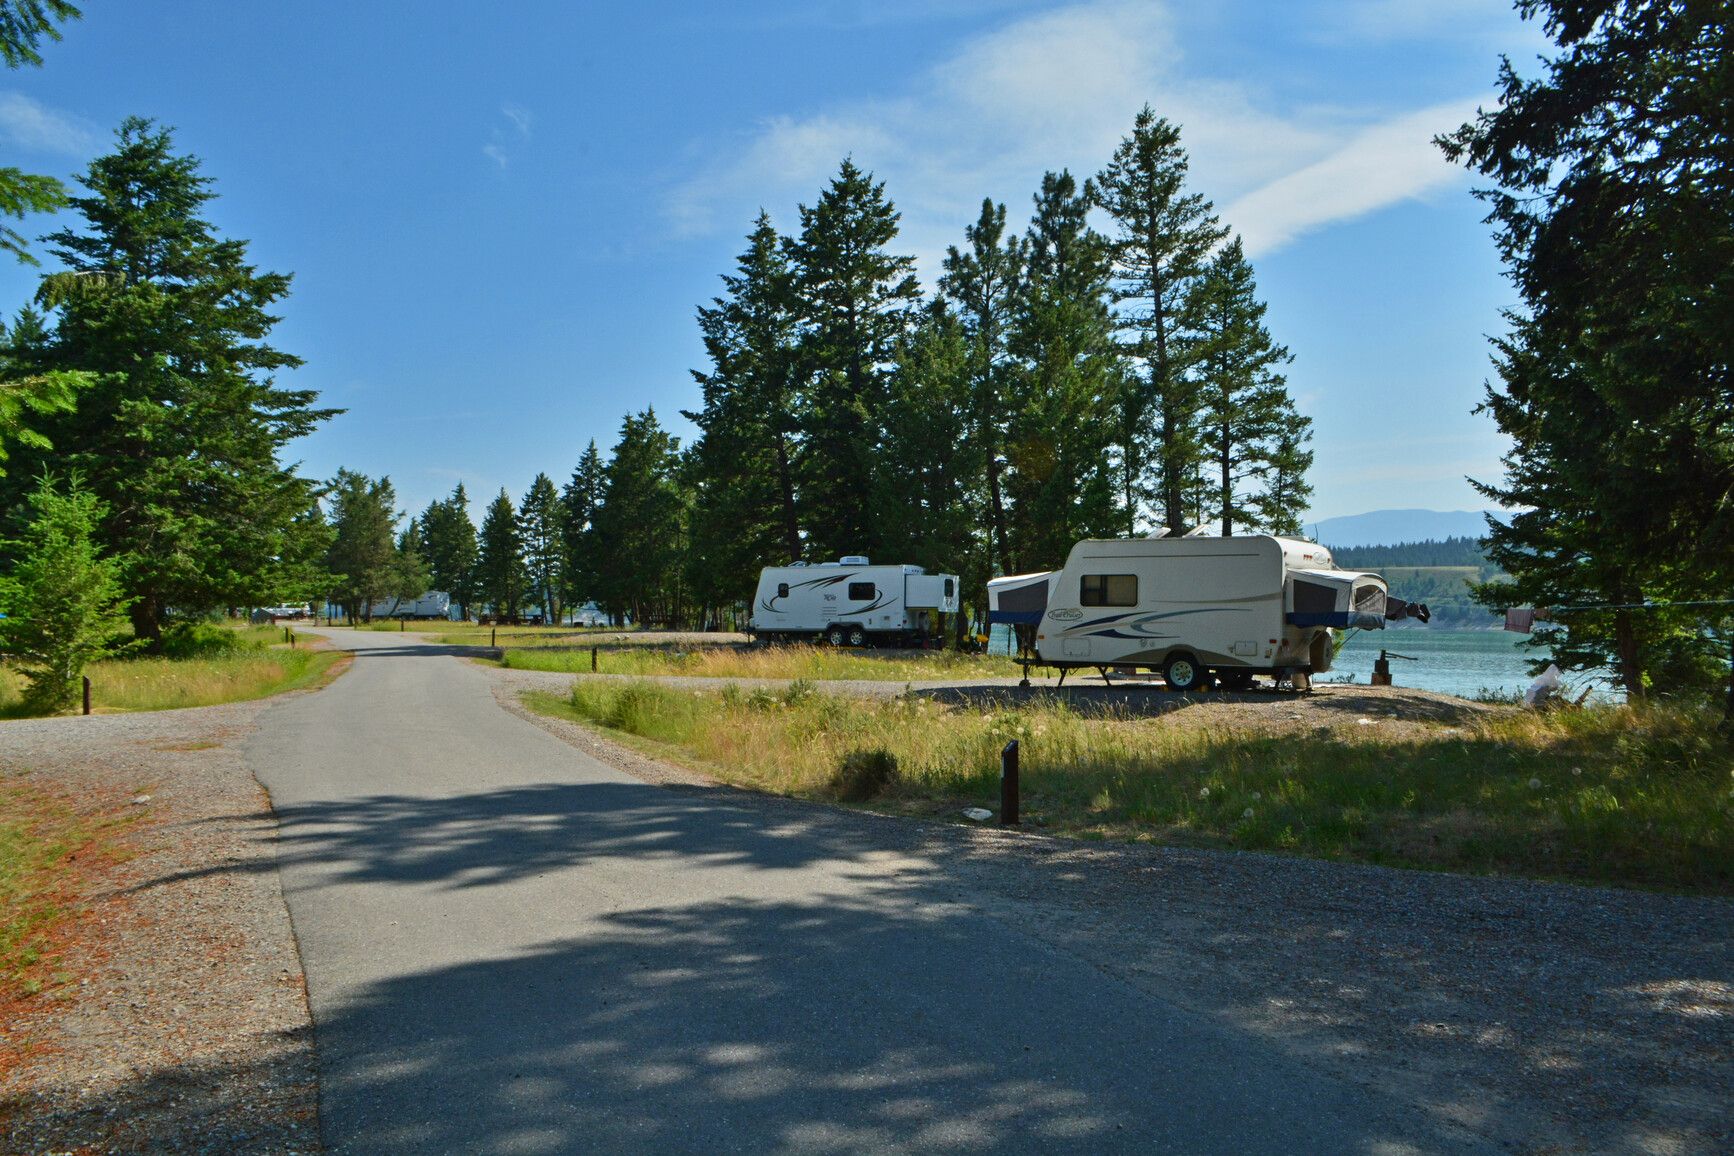 Koocanusa Lake in Kikomun Creek Park offers lakeside camping with plenty of room for RVs.